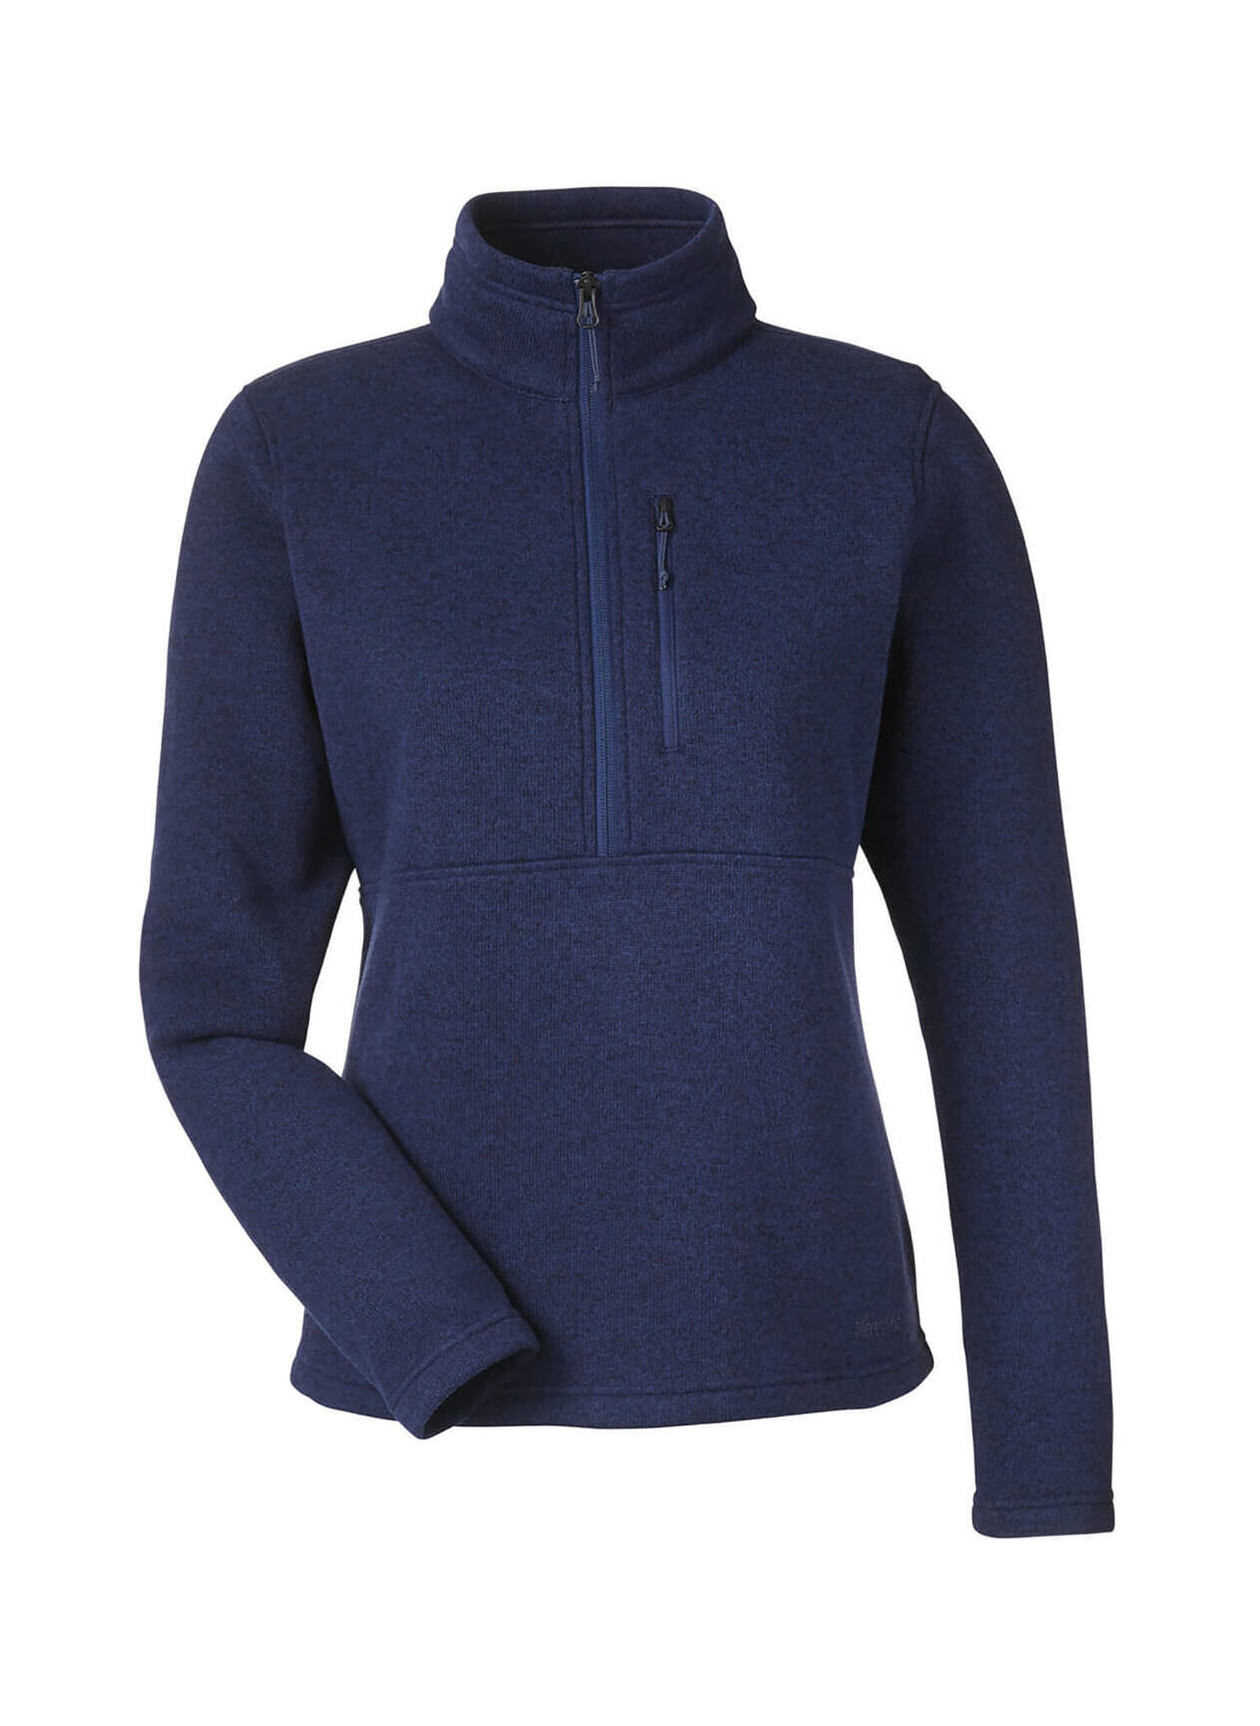 Custom The North Face Women's Sweater Fleece Jacket